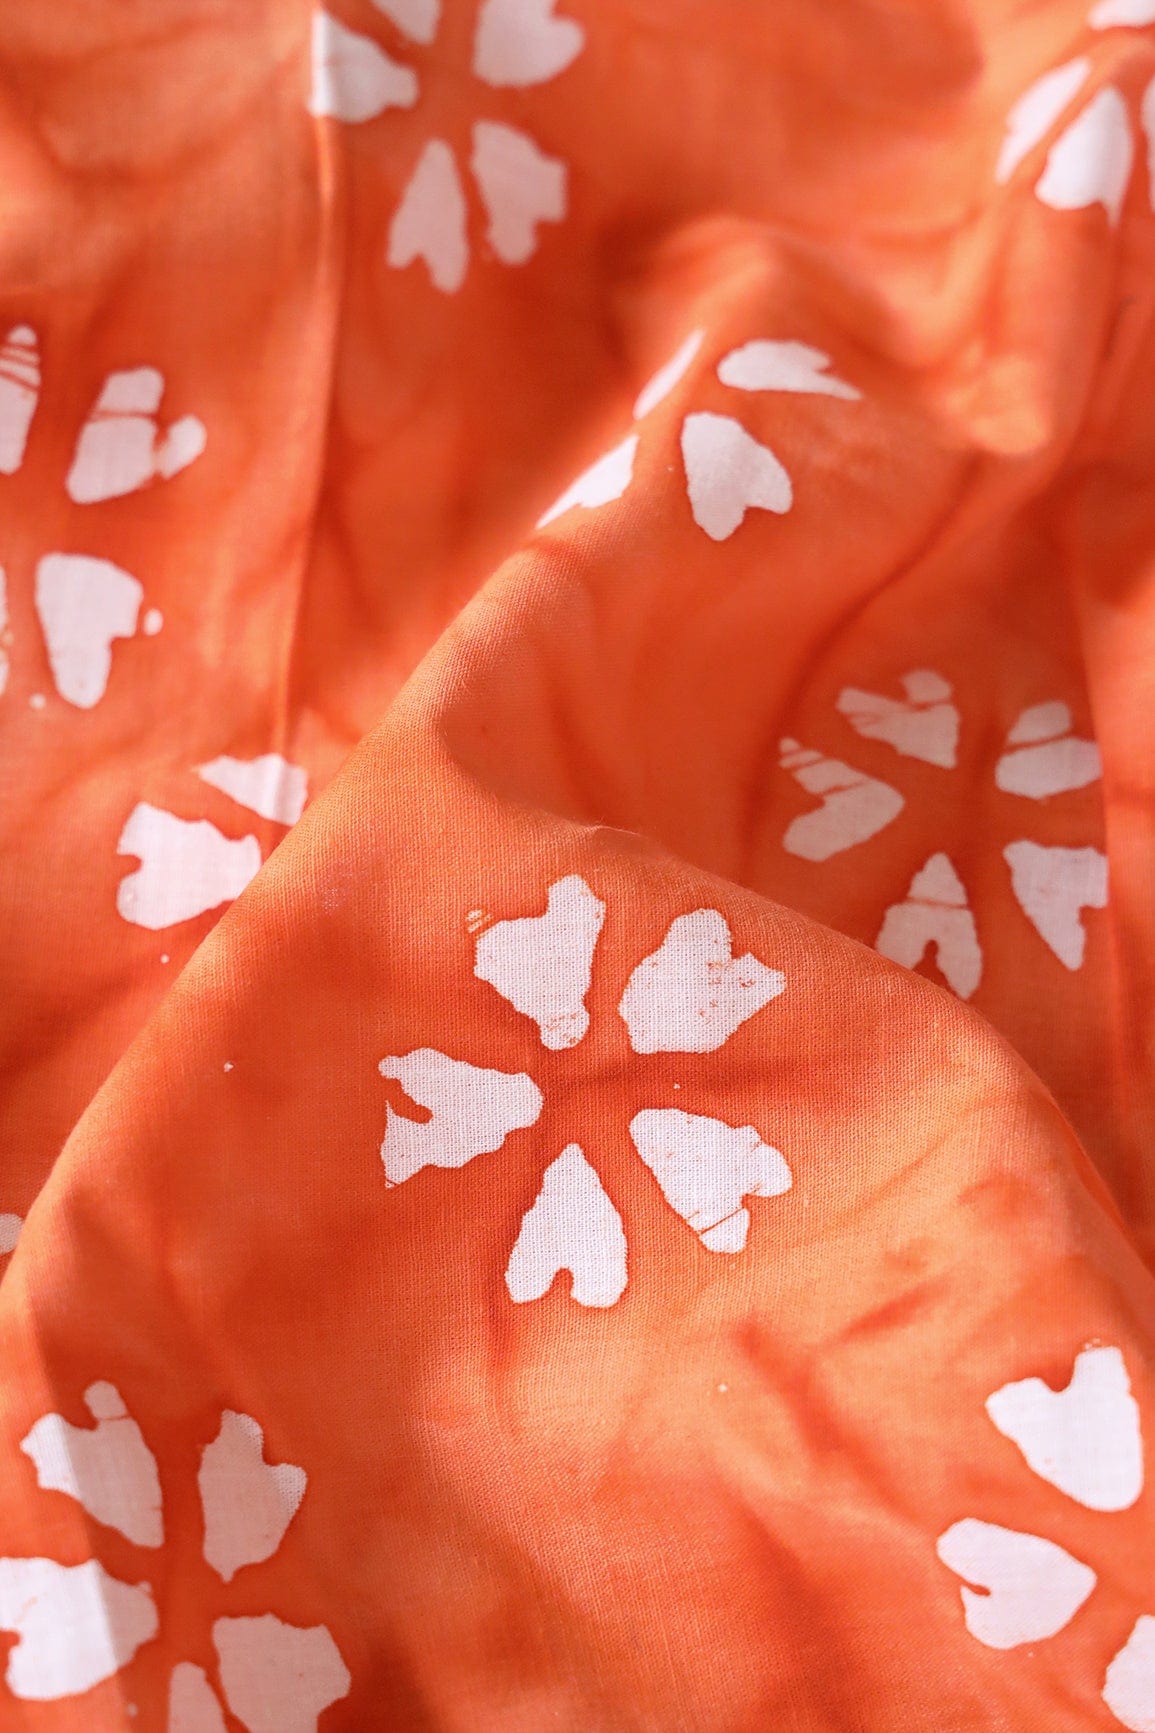 doeraa Prints White And Orange Small  Floral Pattern Batik Handblock Organic Cotton Fabric